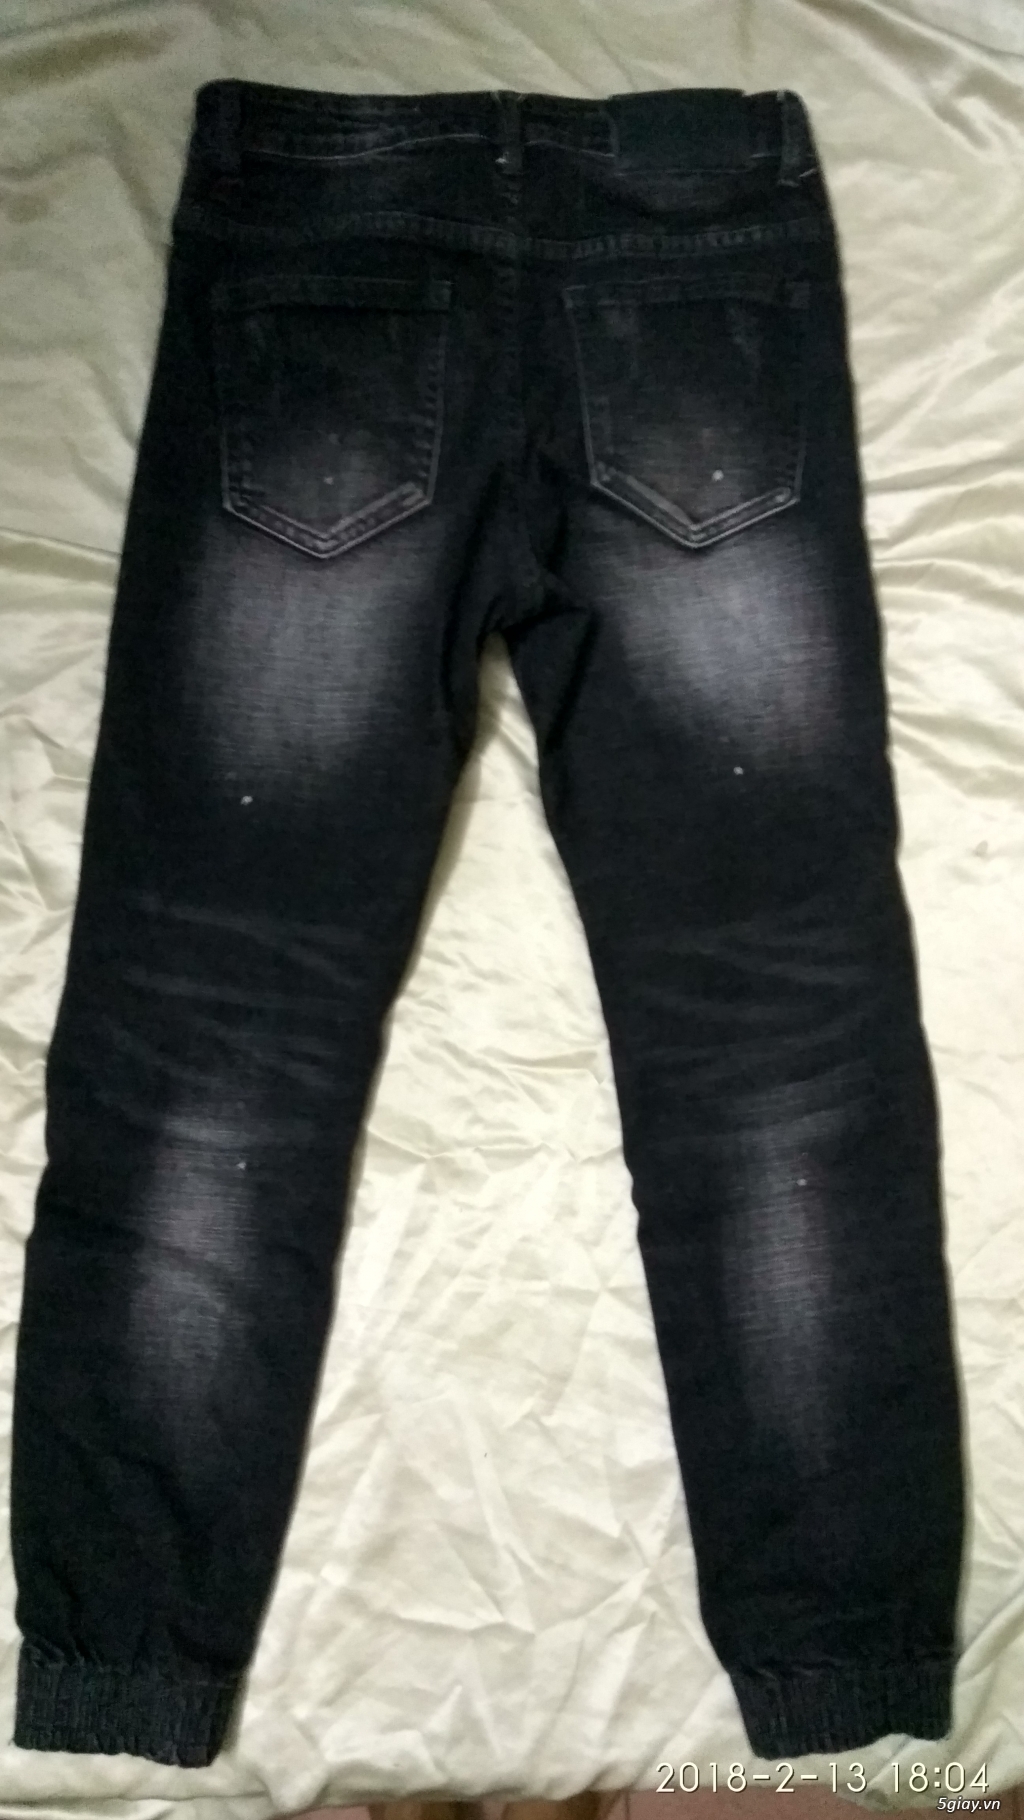 2 quần jeans nam size 29 giá bèo - 3